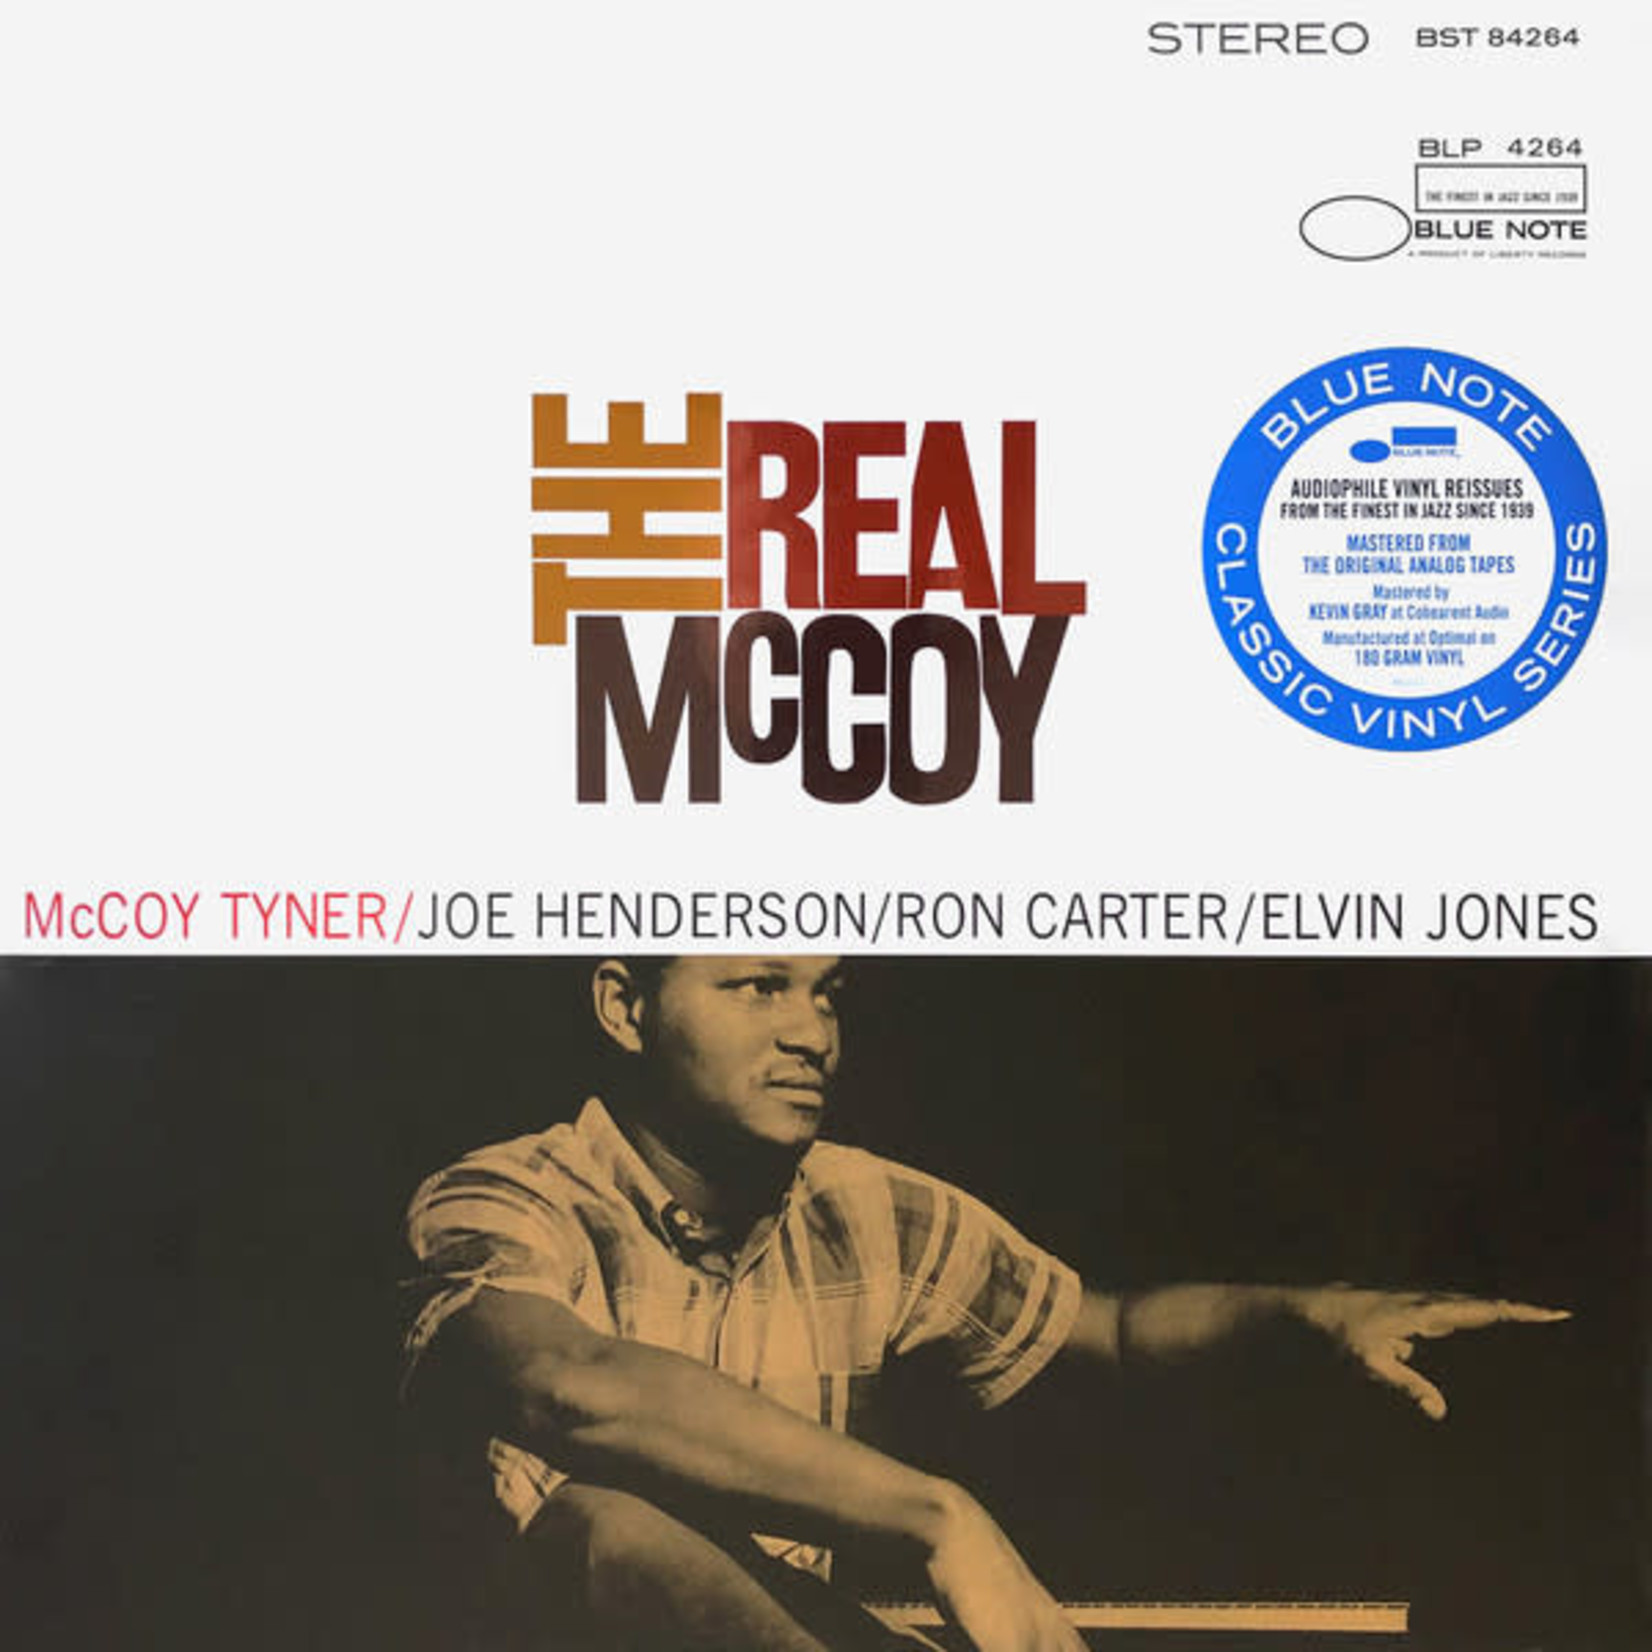 [New] McCoy Tyner - The Real McCoy